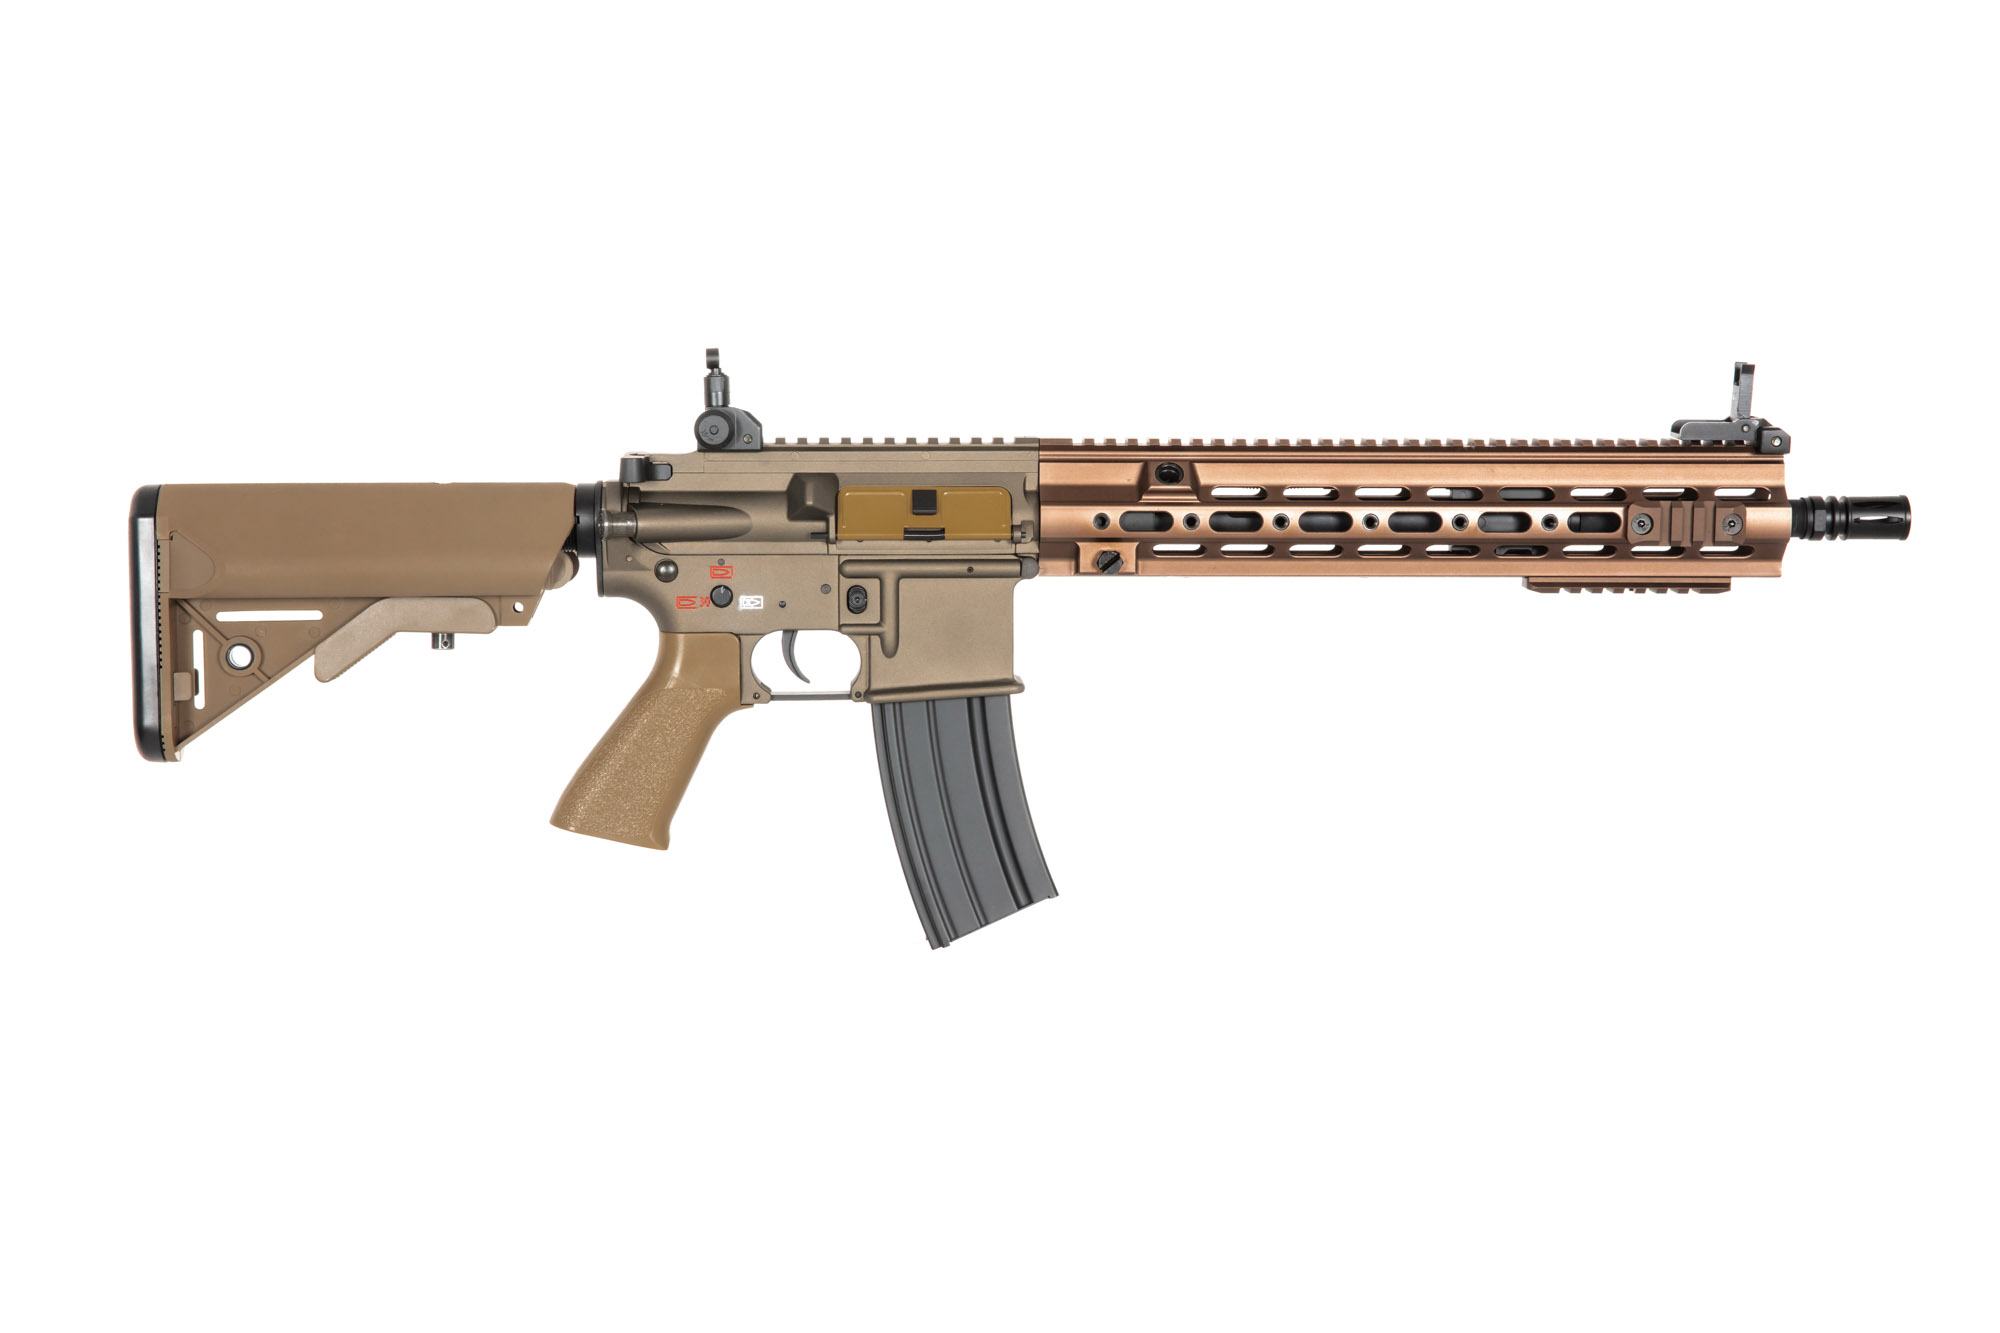 HK416A5 812S Carbine Replica - tan